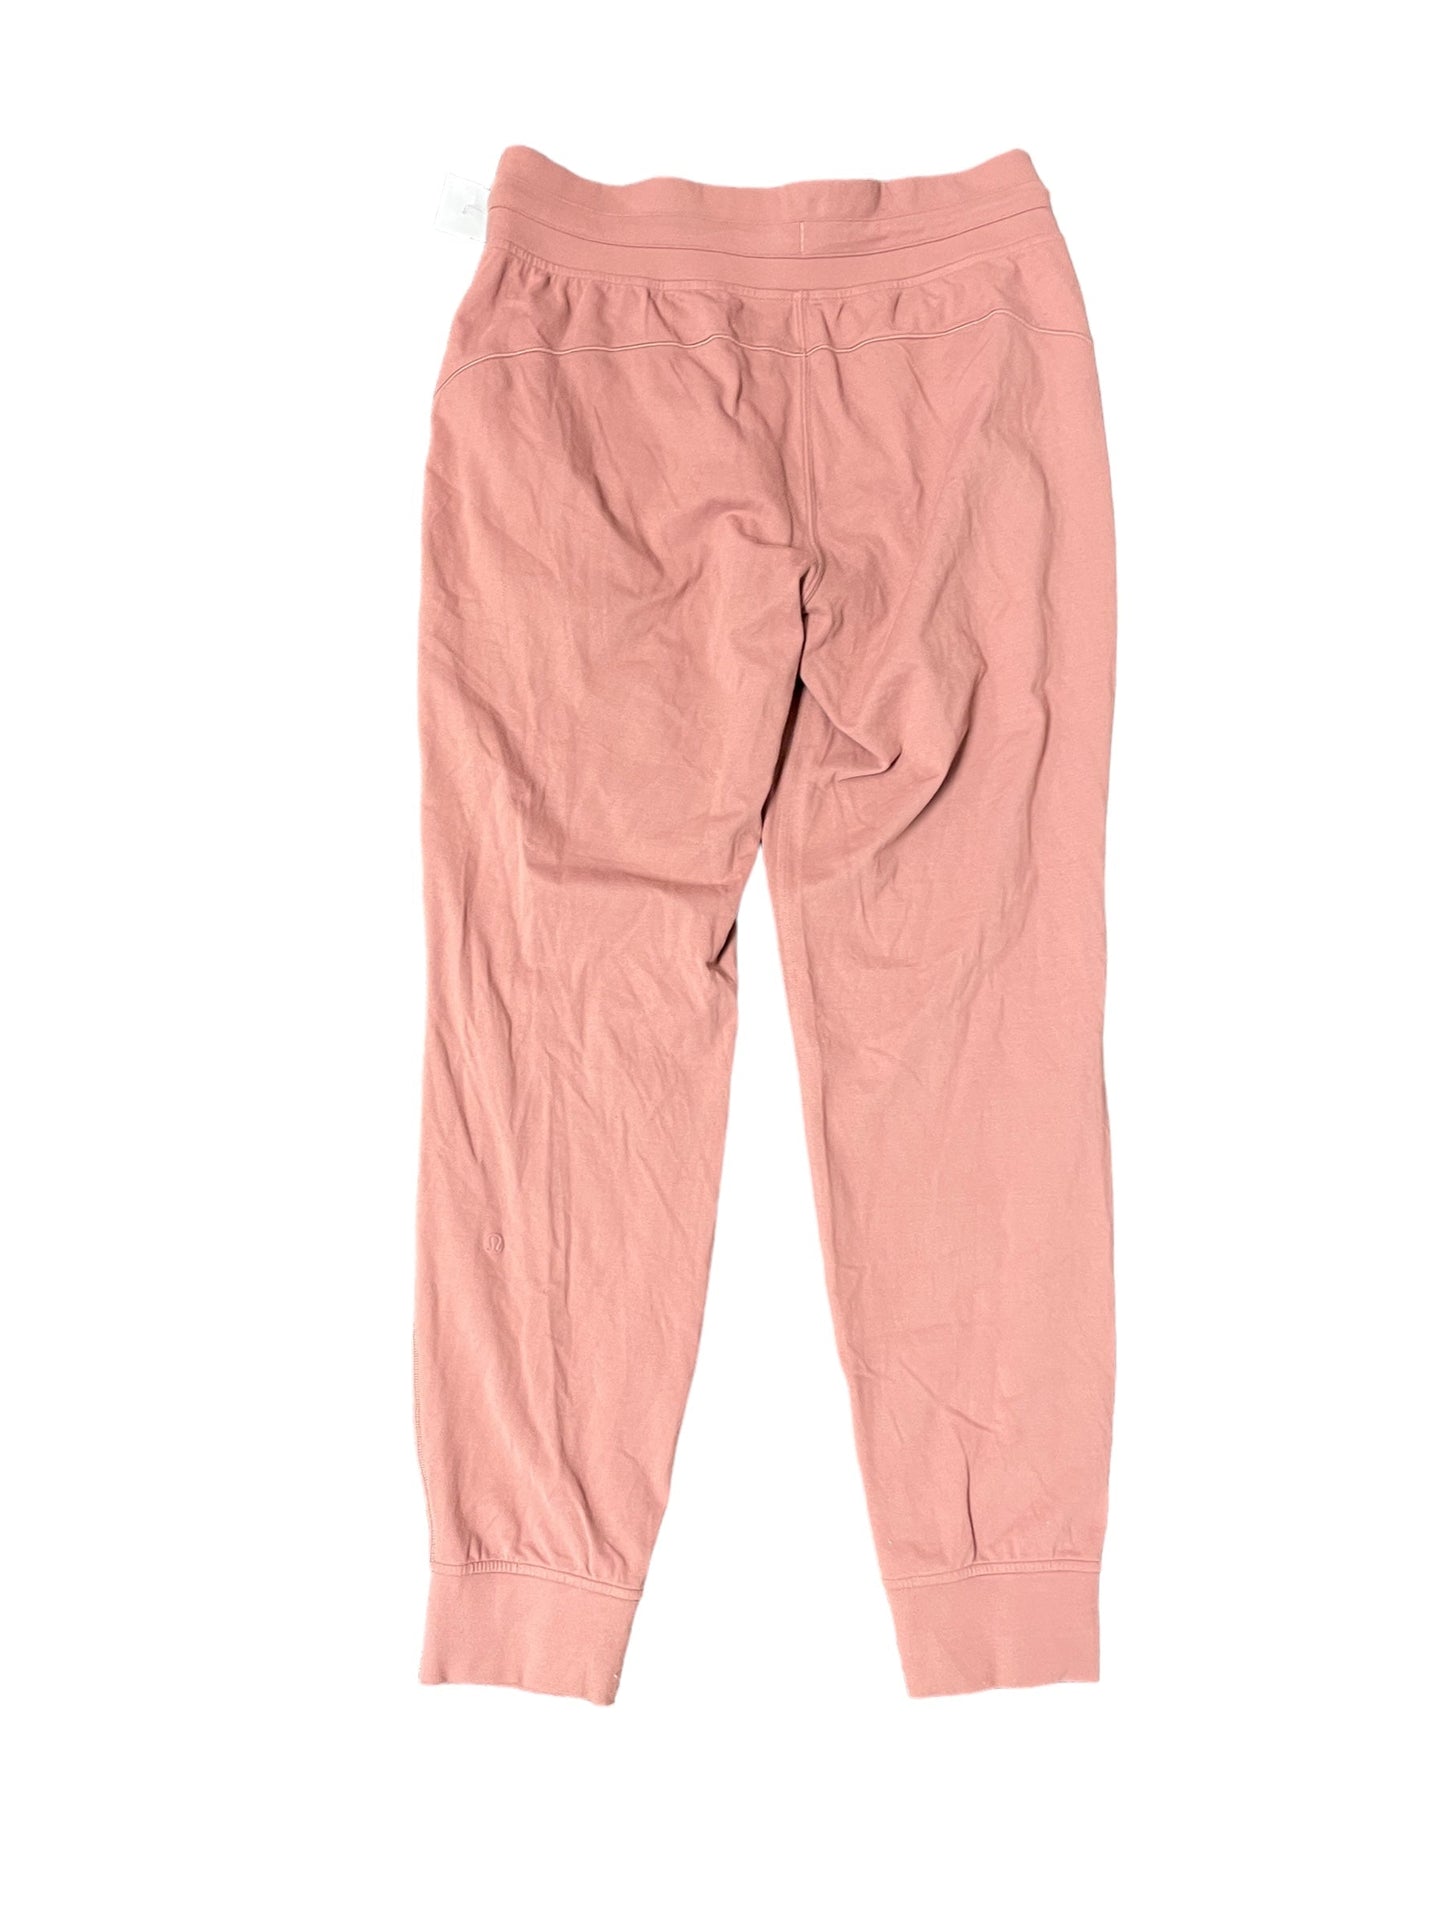 Pink Athletic Pants Lululemon, Size 8